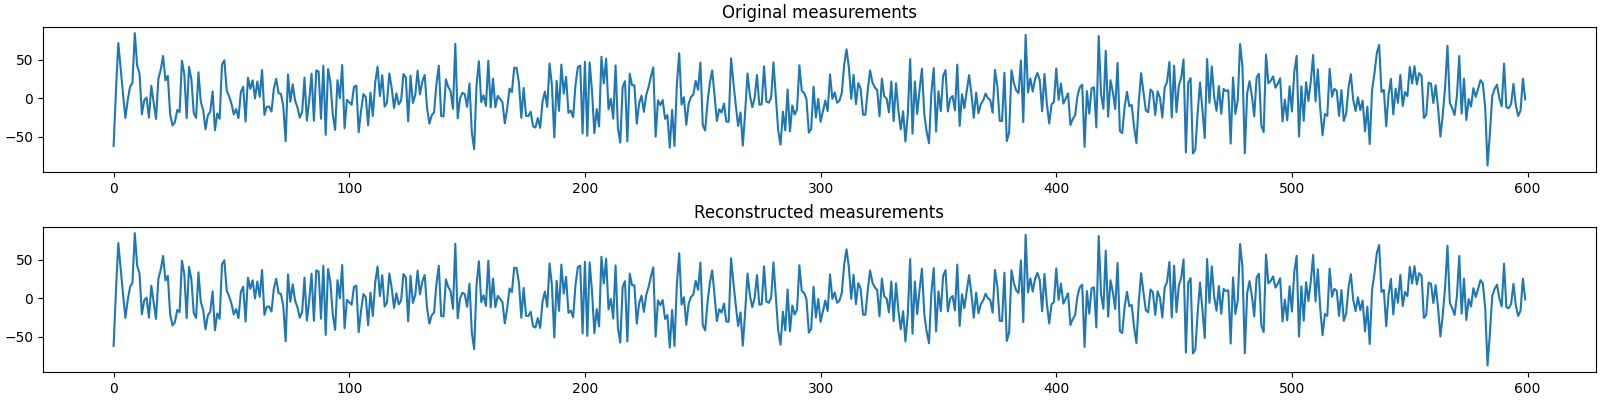 Original measurements, Reconstructed measurements